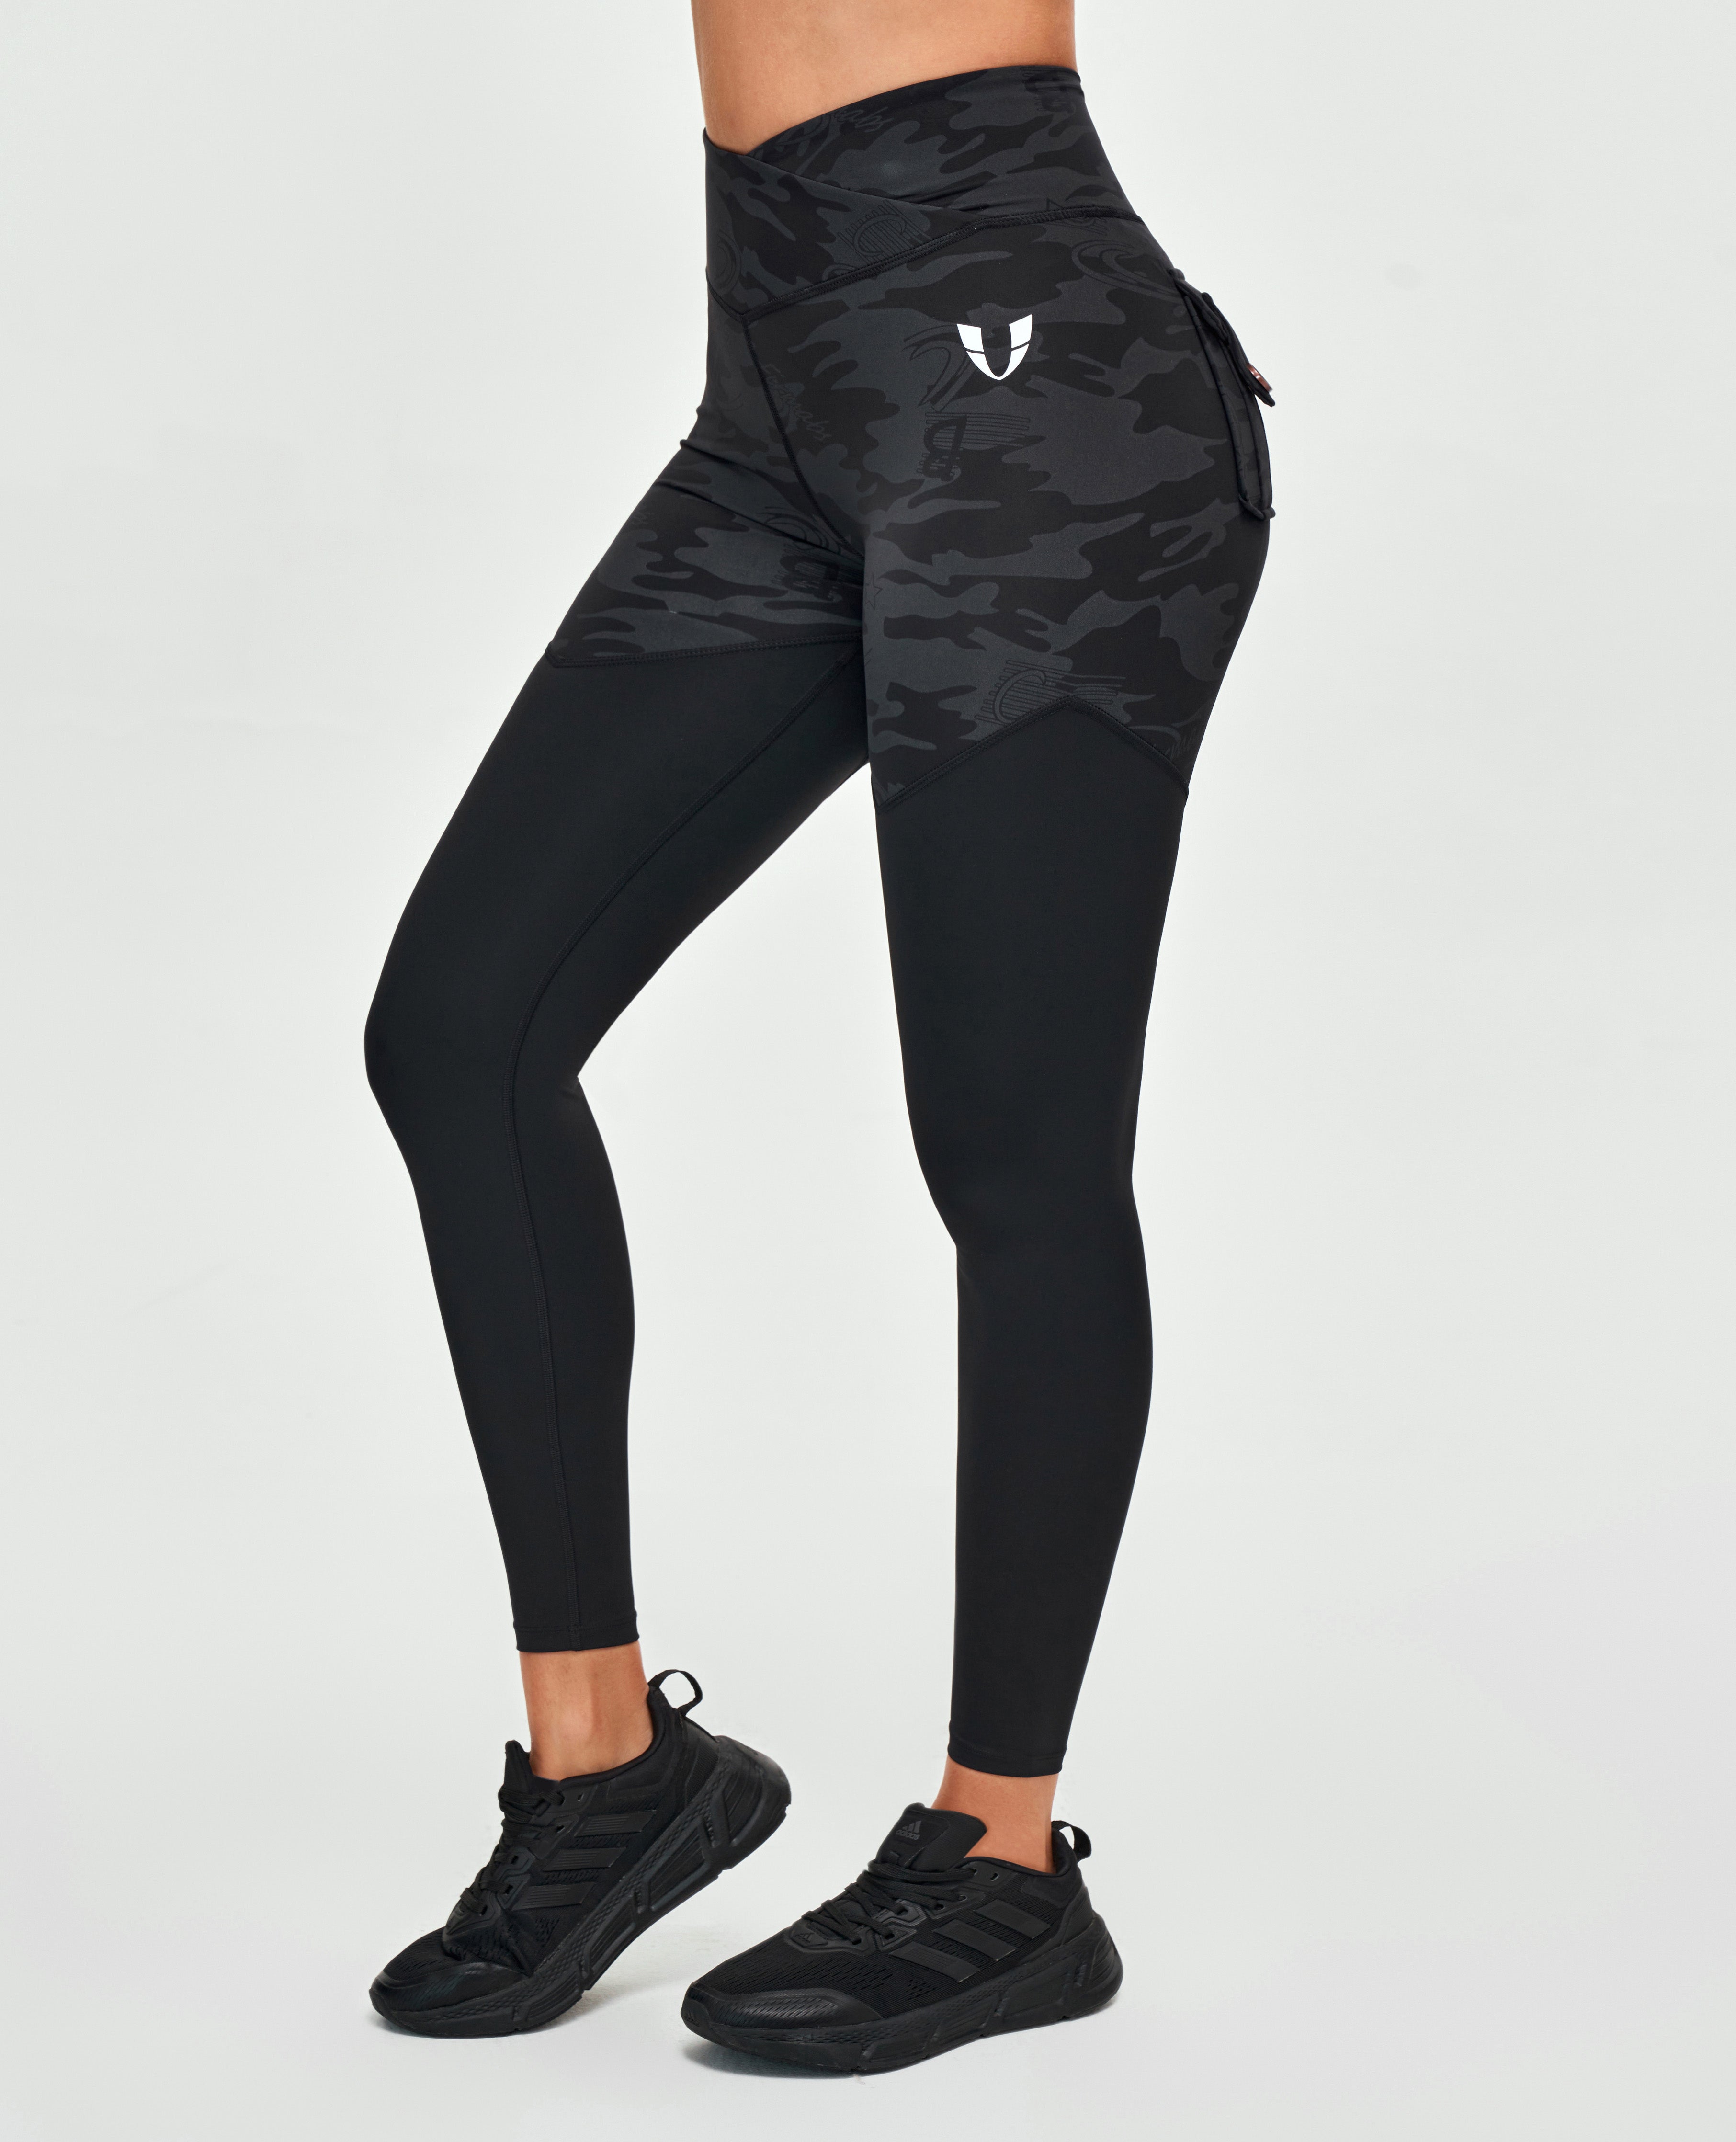 Athleta Black & Gray Tropical Print Crop Leggings Size XS